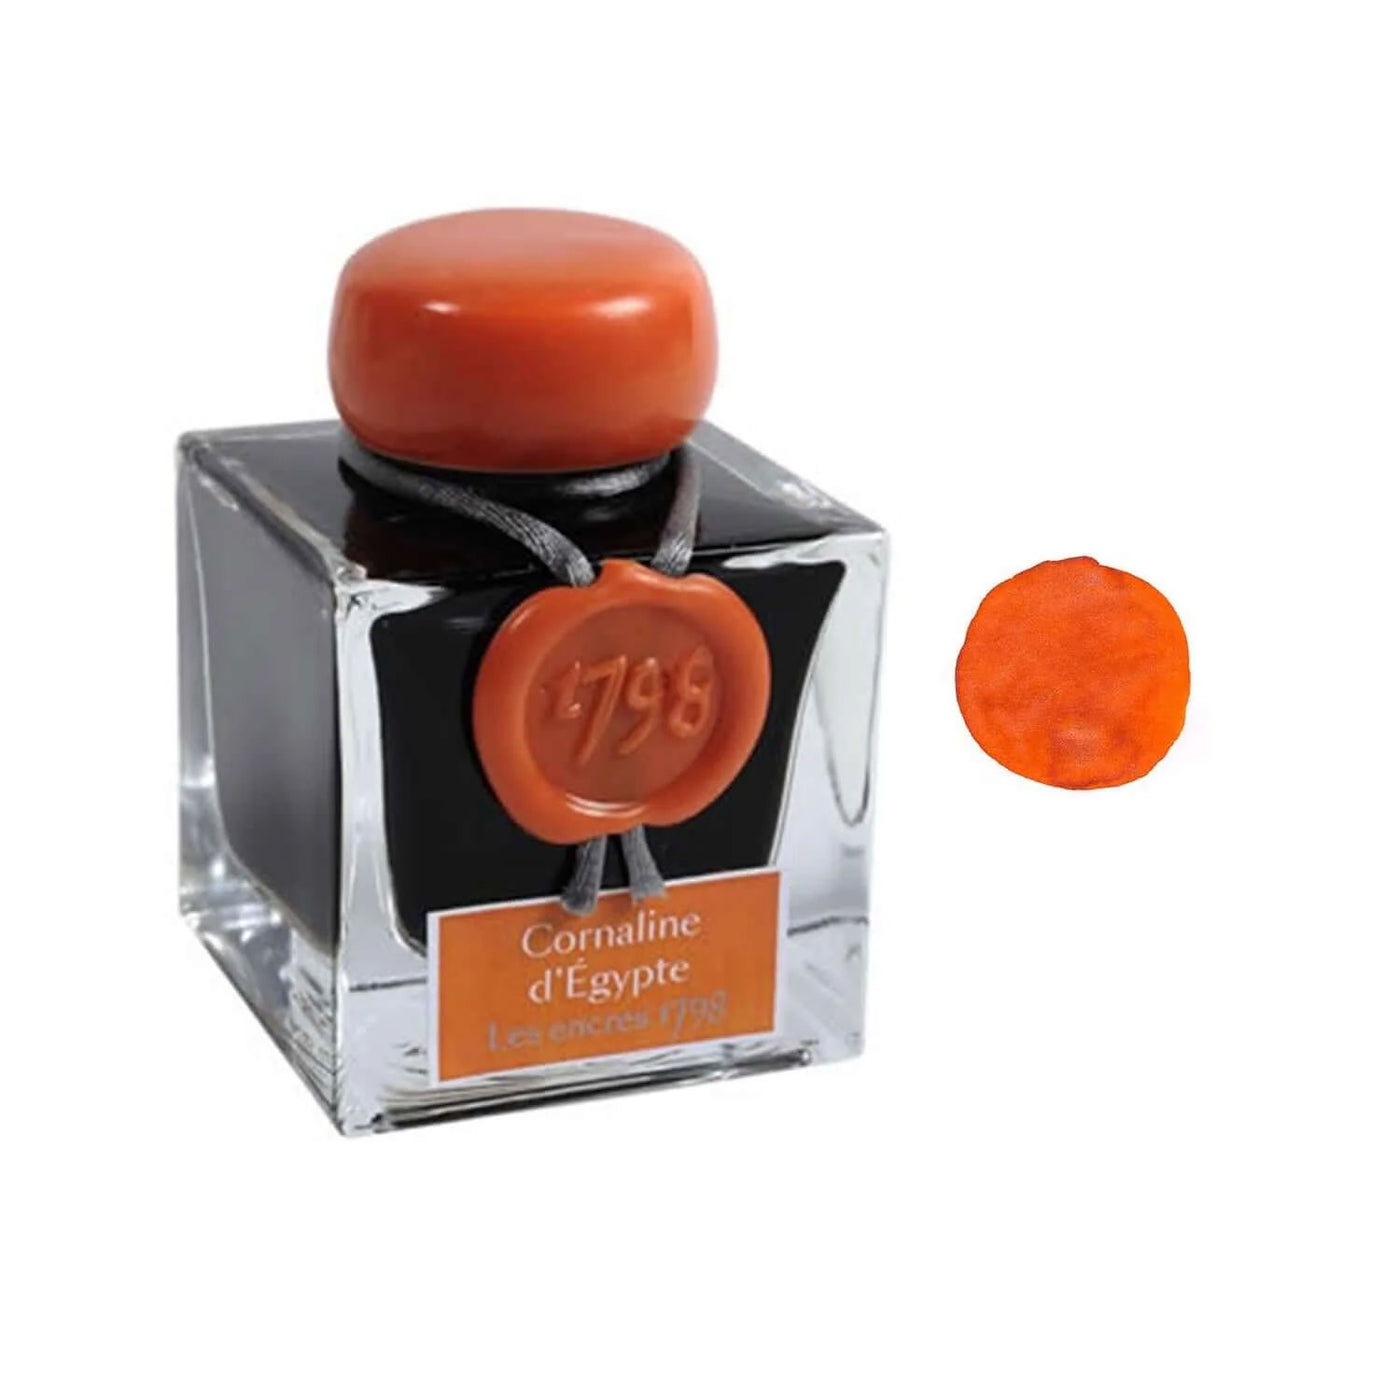 J Herbin 1798 Special Edition Silver Shimmer Inks Cornaline de Gypte (Orange) - 50ml